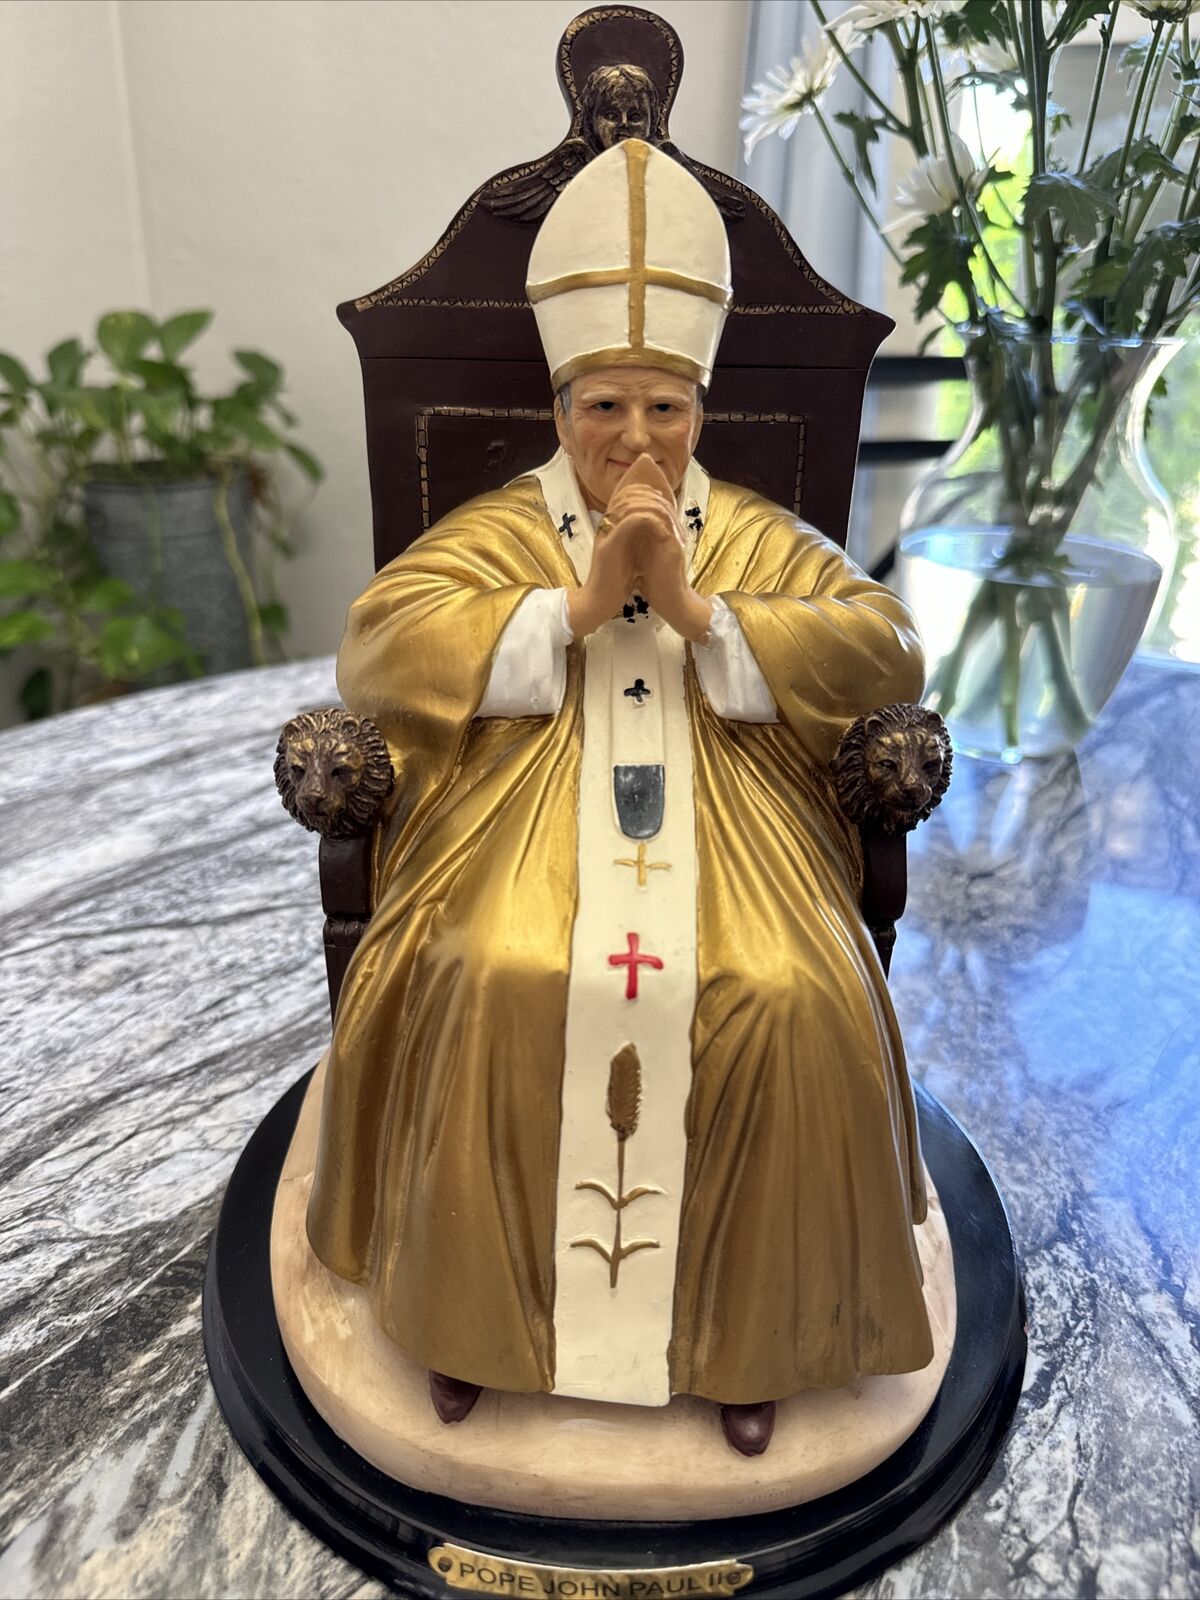 Pope John Paul II Sculpture Praying Hands Vintage Gold Unique Seating Catholic